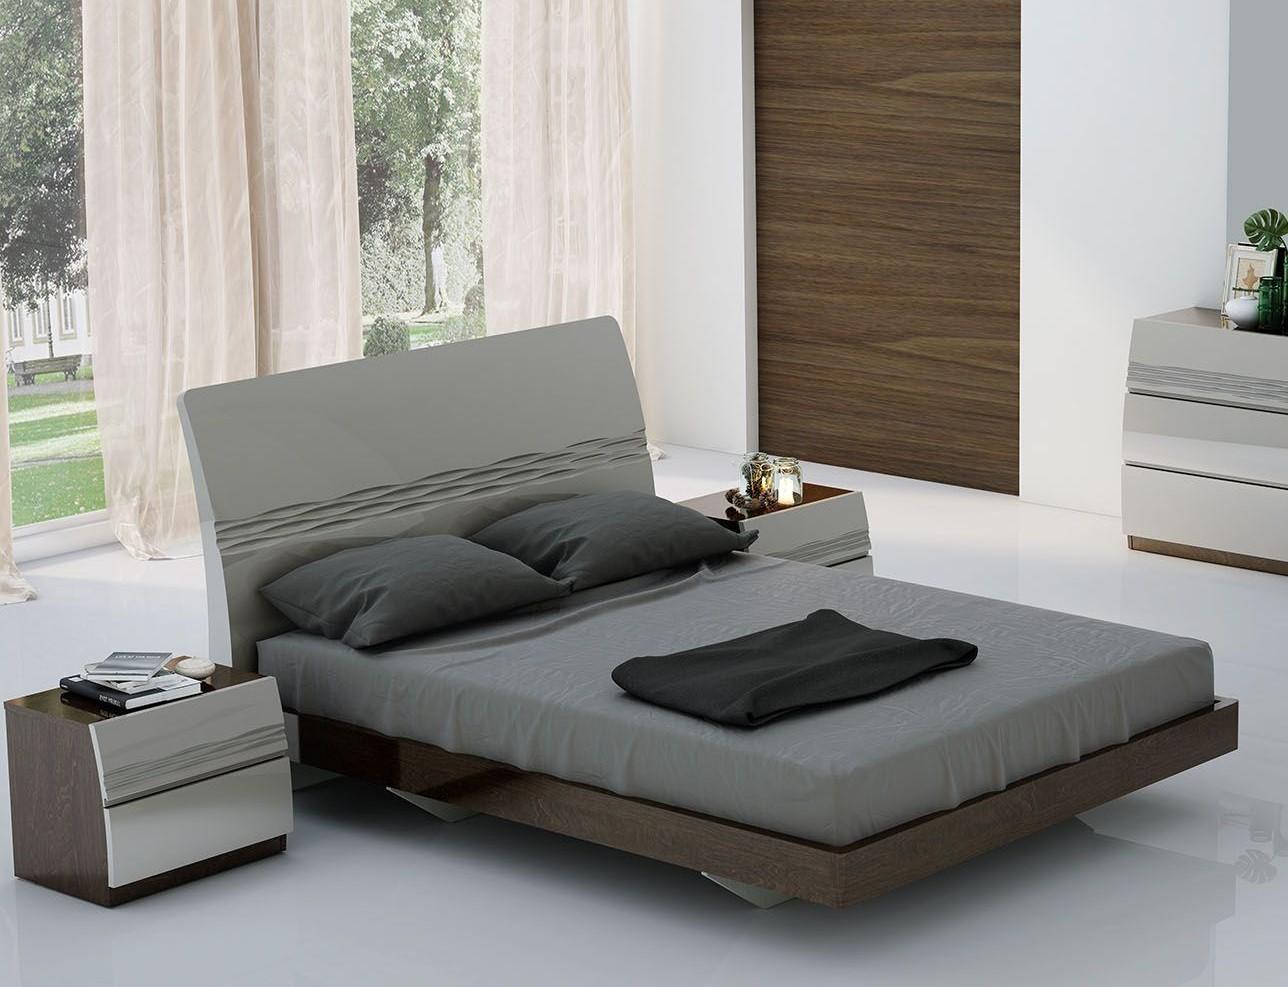 

    
American Eagle Furniture P102-BED-Q Platform Bedroom Set Brown/Light Gray B-P102-Q Set-4
